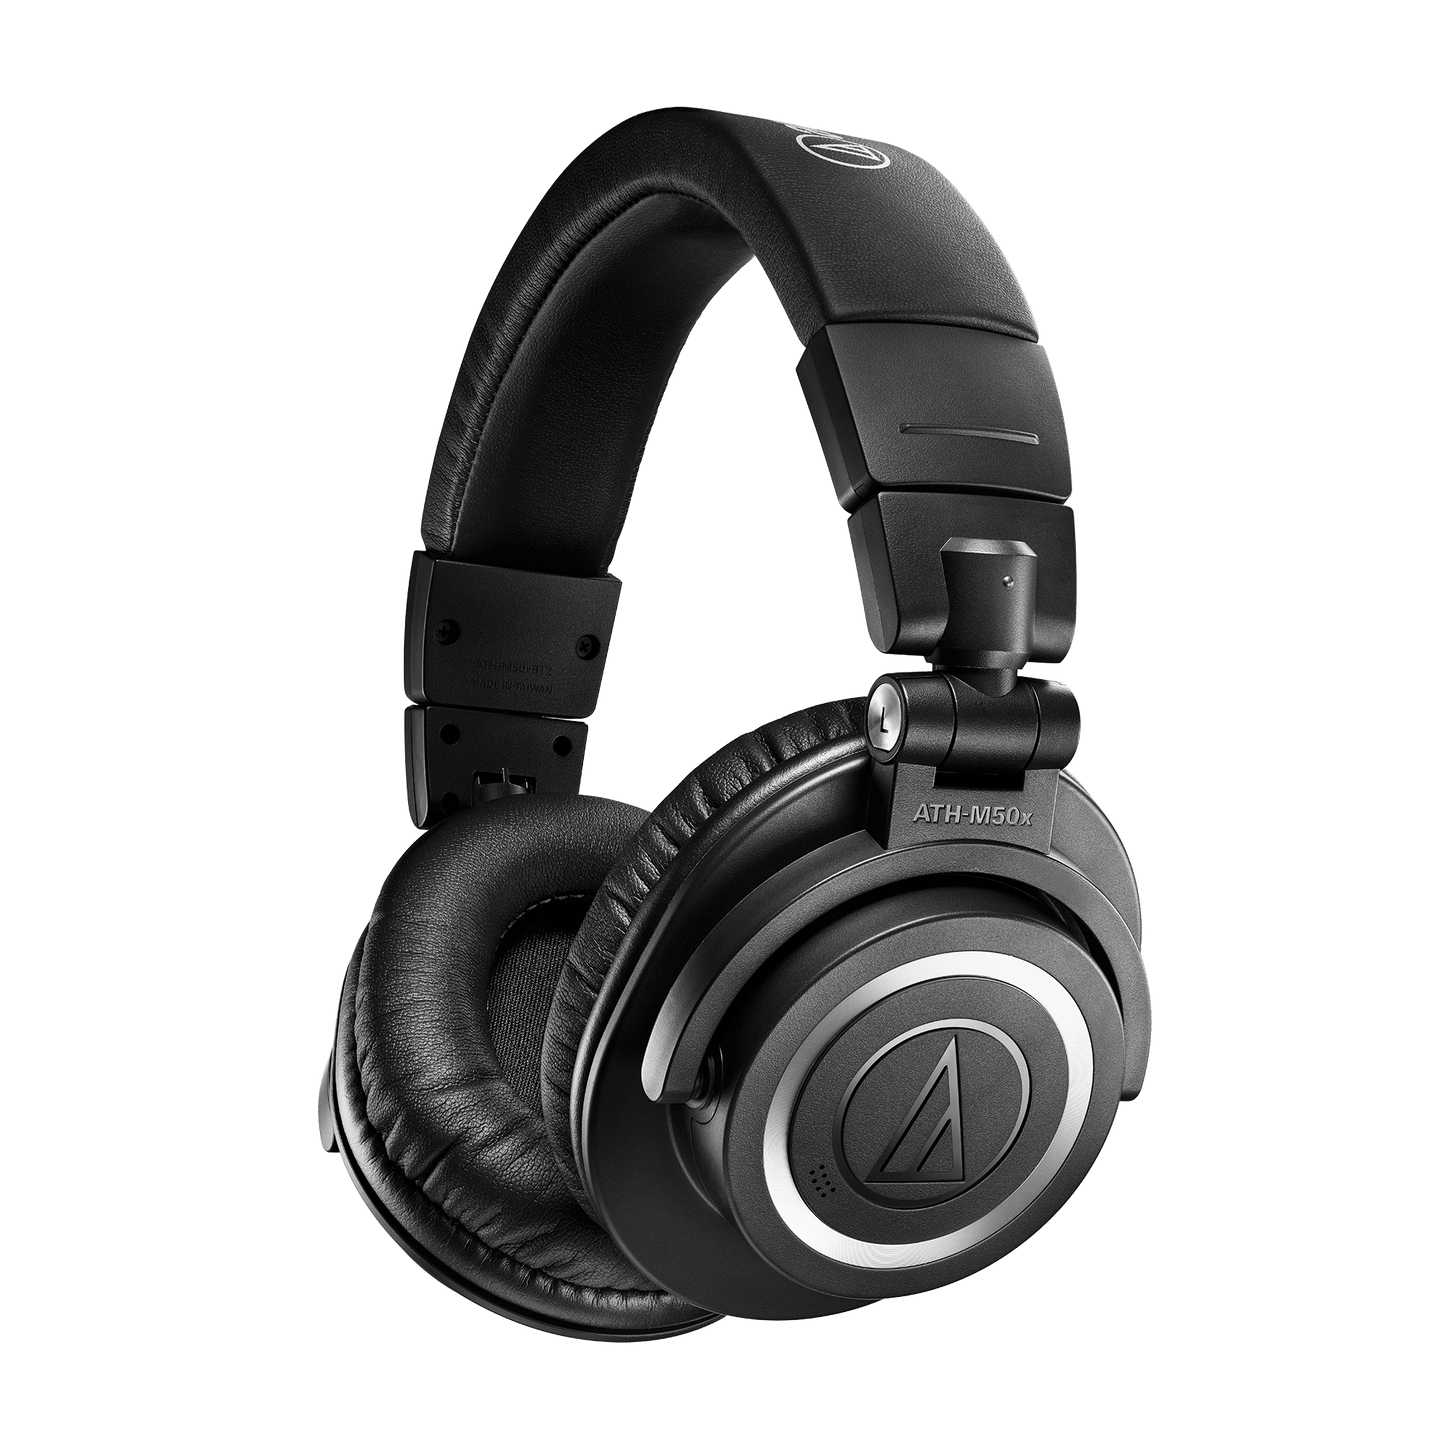 Audio-Technica ATH-M50xBT2 Wireless Over-Ear Headphones